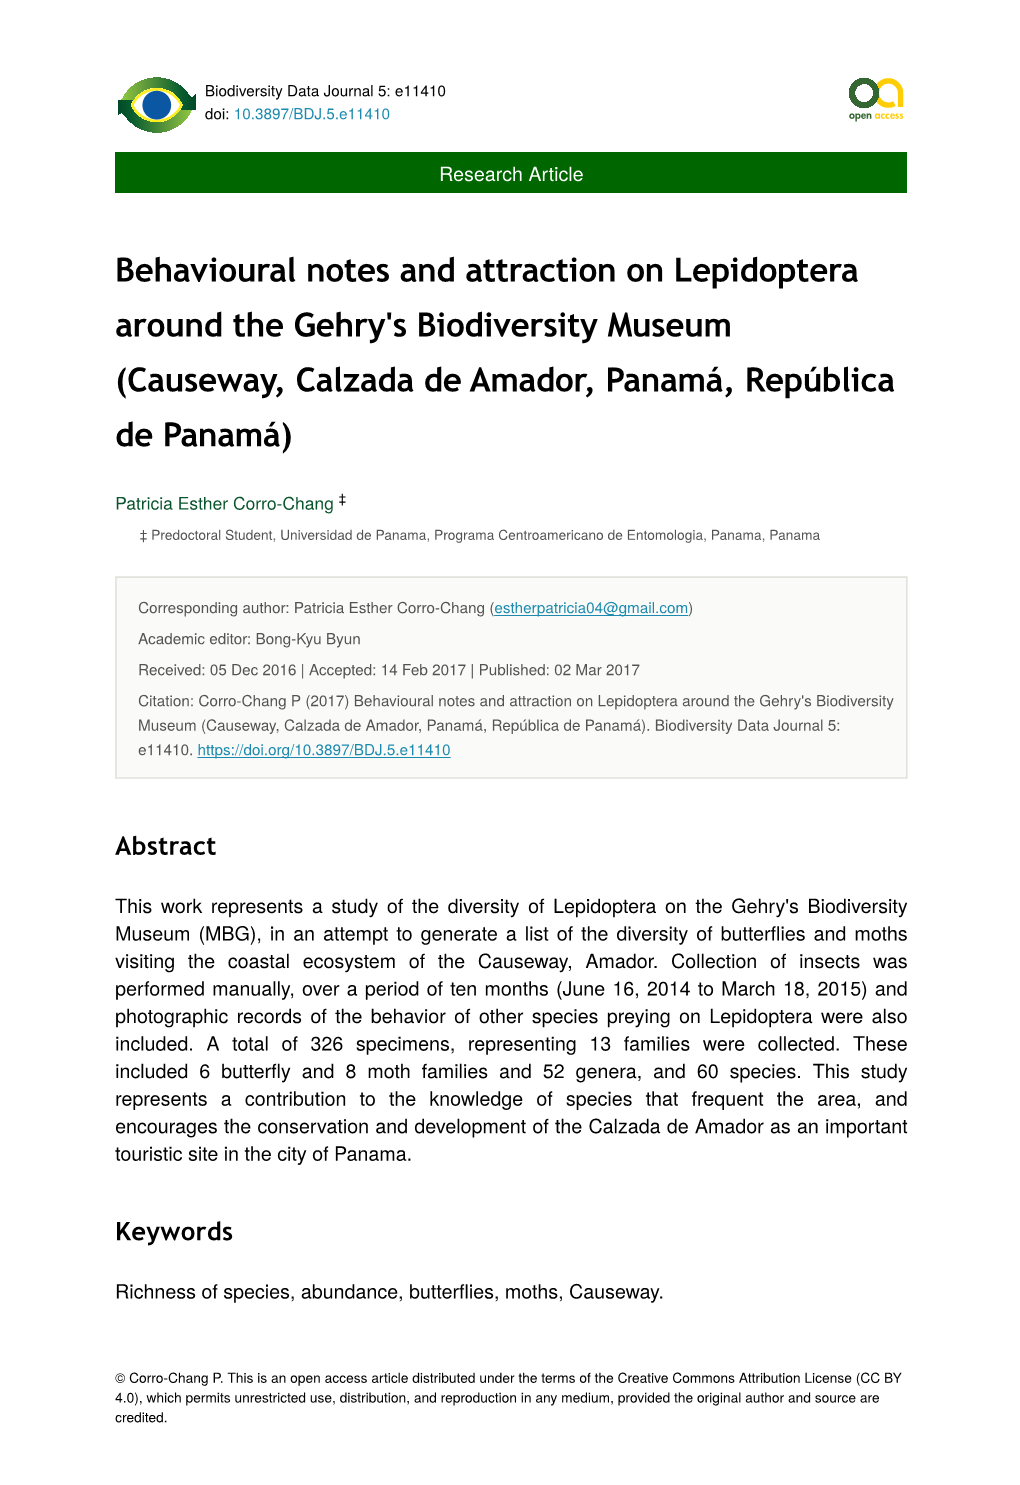 Behavioural Notes and Attraction on Lepidoptera Around the Gehry's Biodiversity Museum (Causeway, Calzada De Amador, Panamá, República De Panamá)